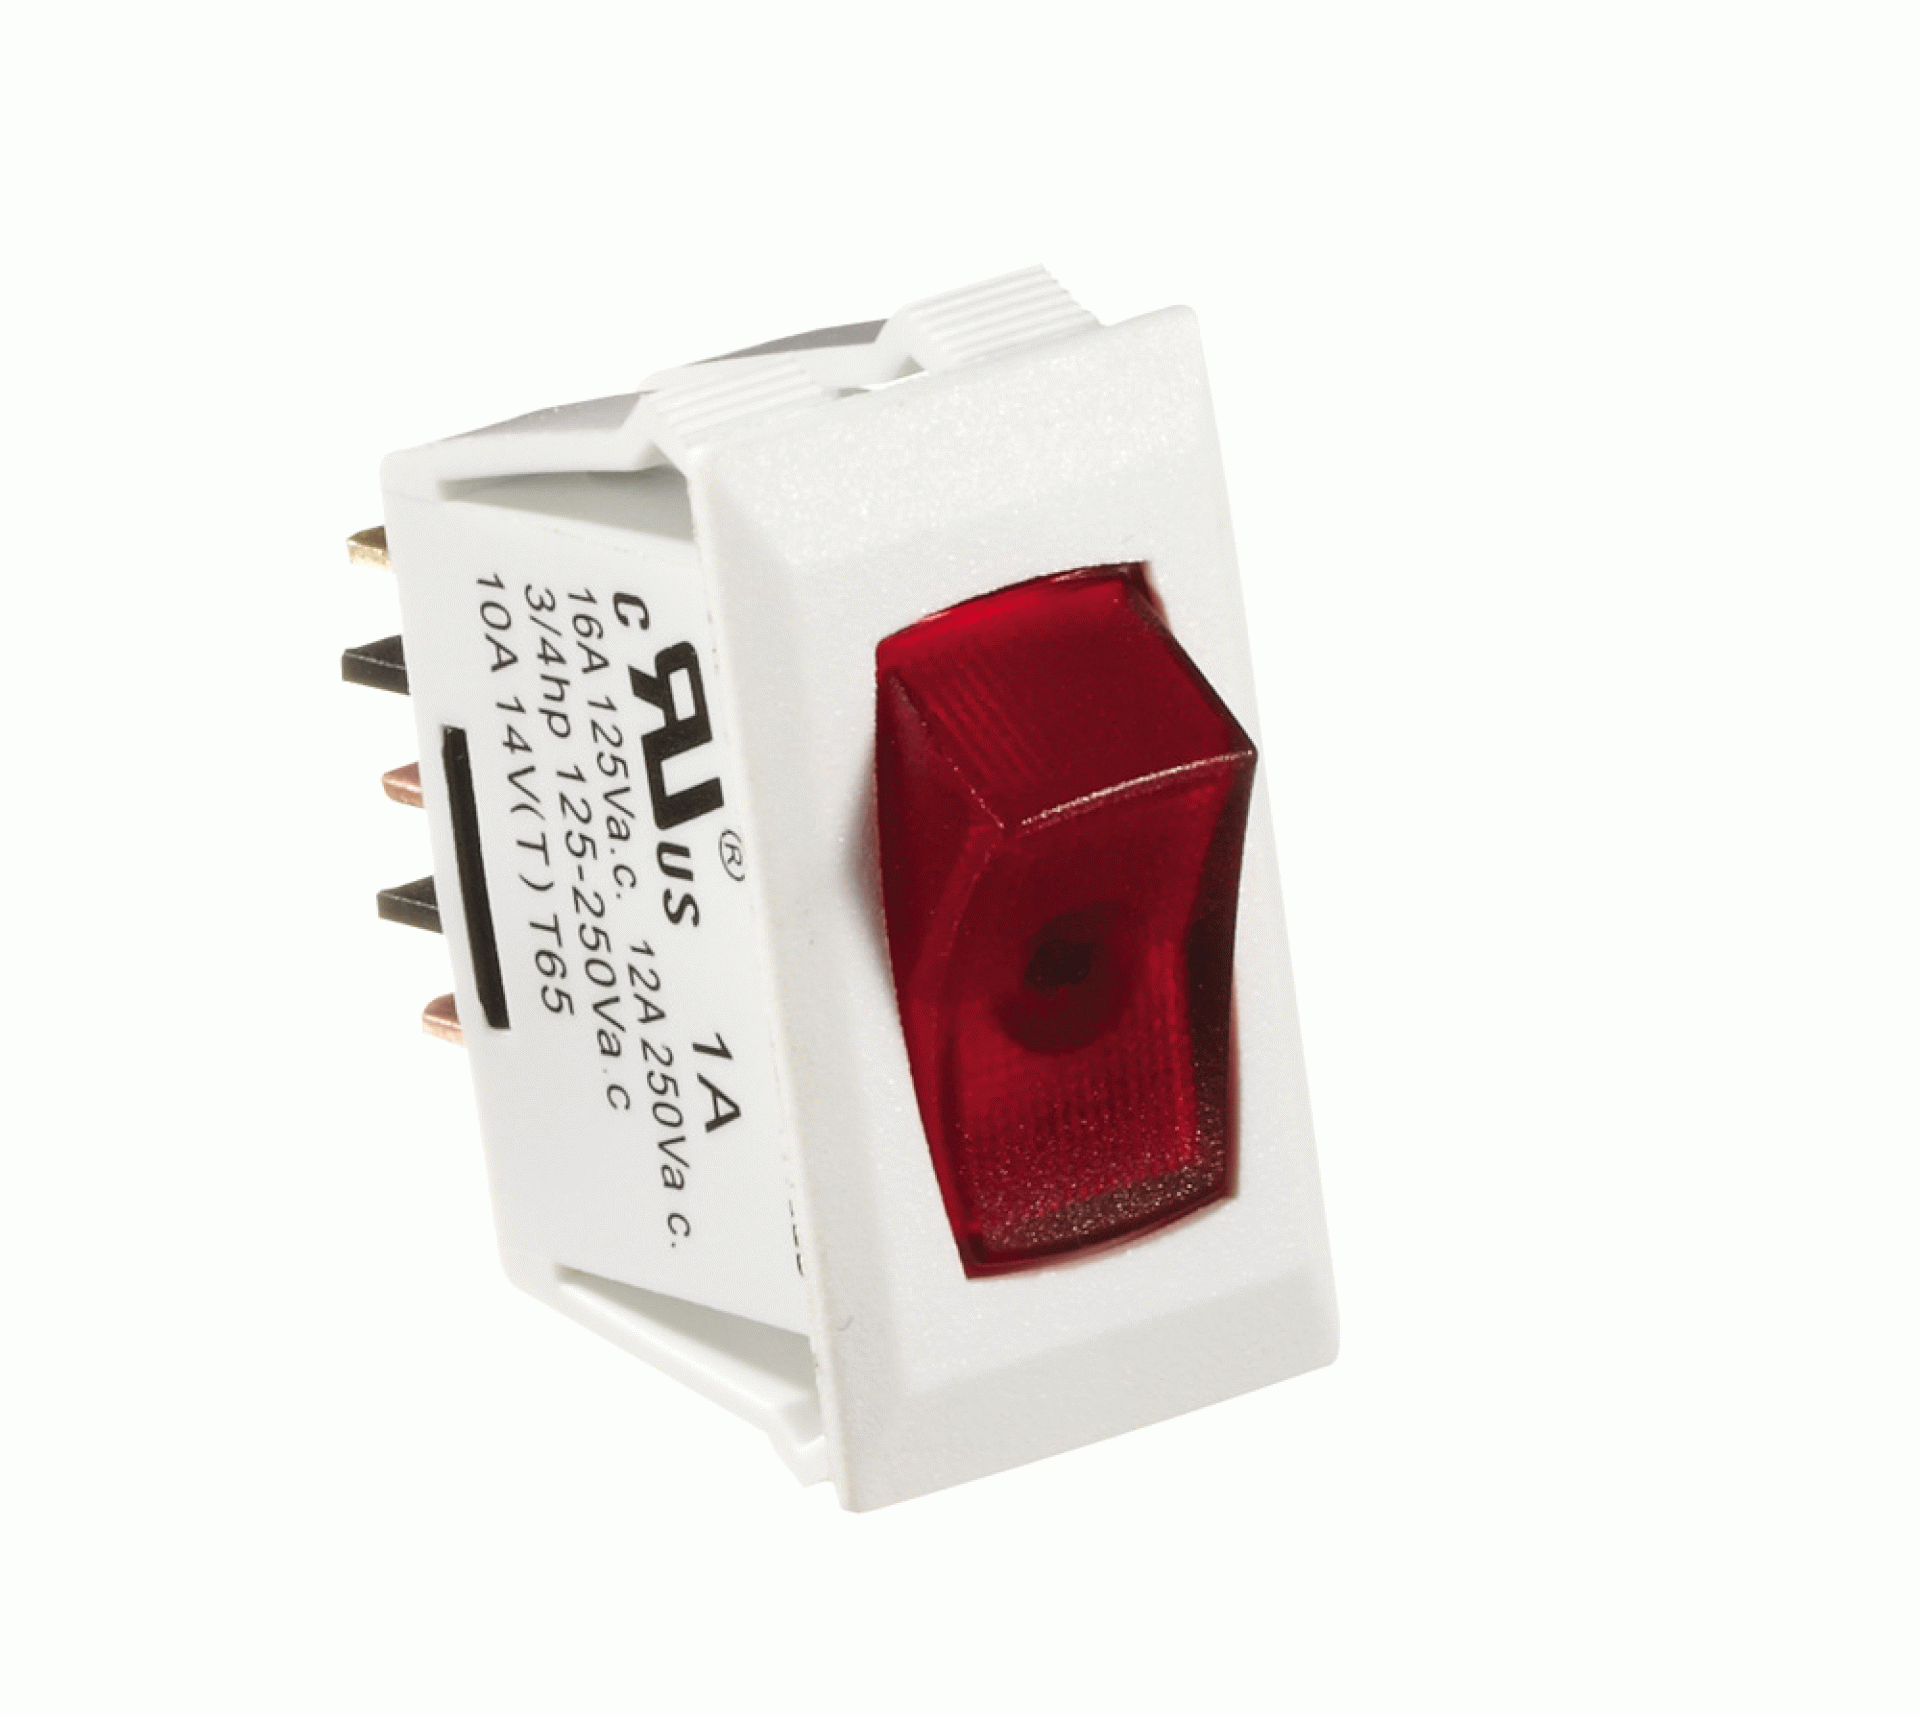 RV DESIGNER COLLECTION | S241 | Rocker Switch Illuminated White/Red